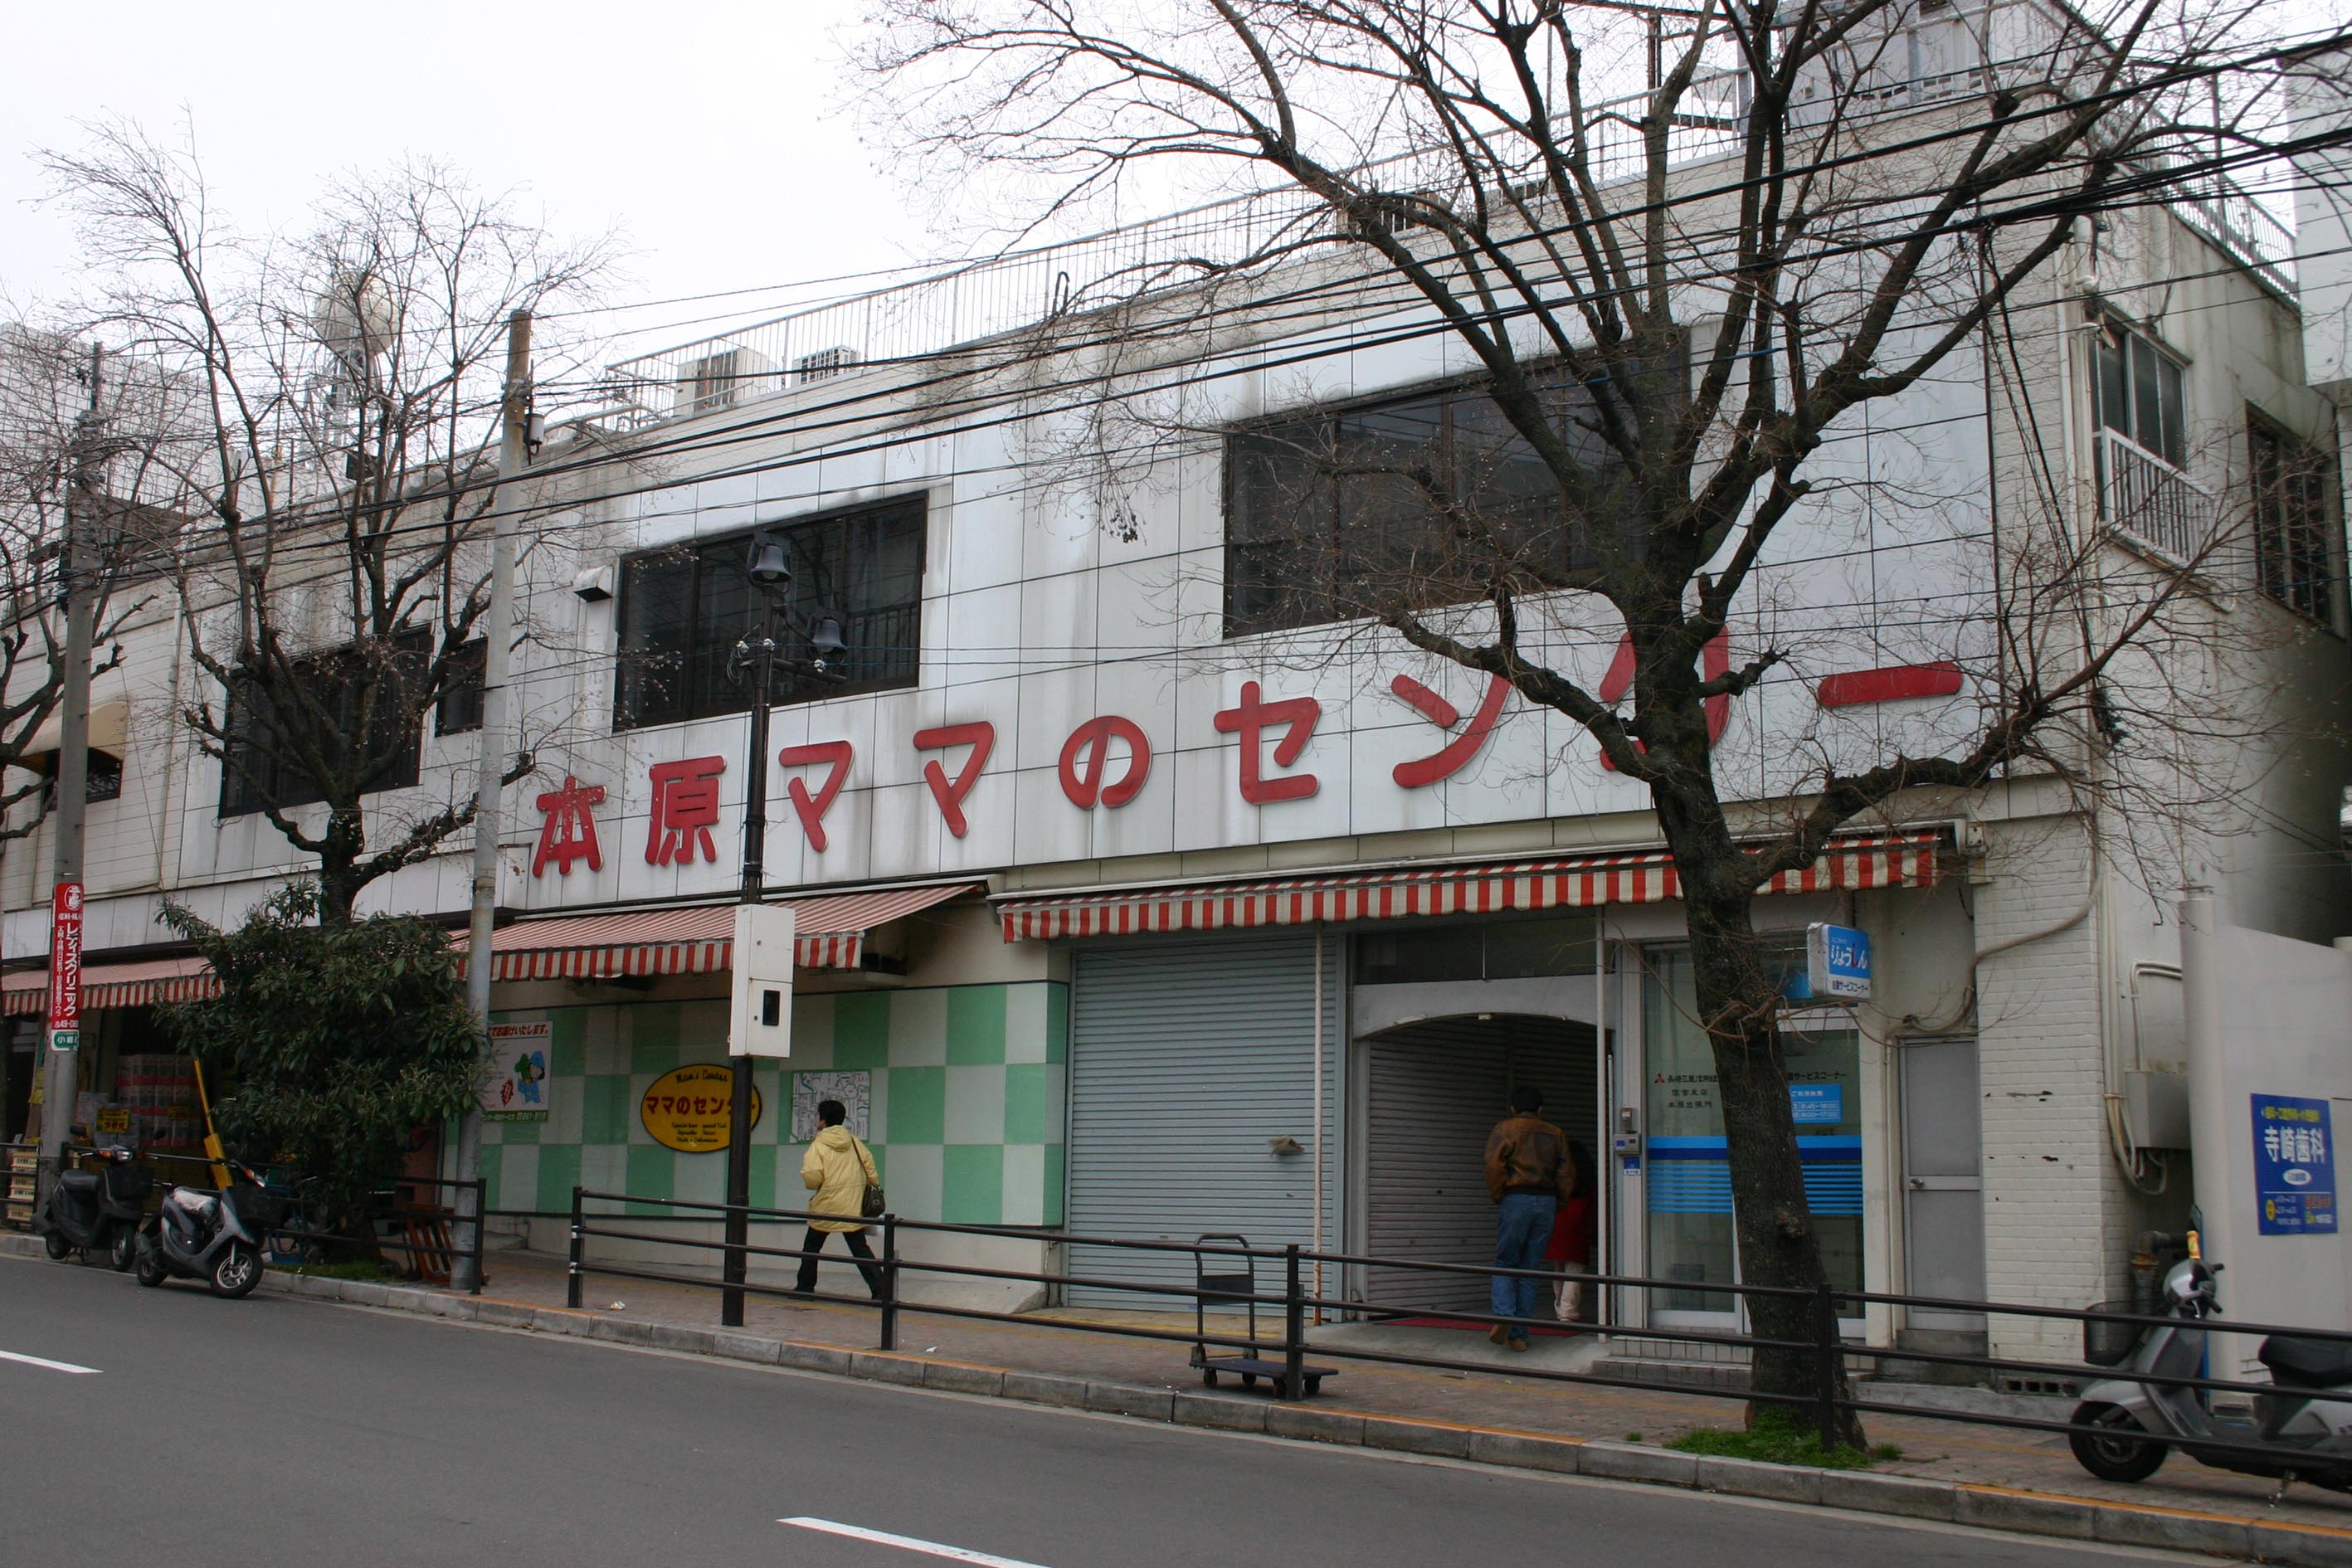 Supermarket. 760m until the mom of center Motohara store (Super)